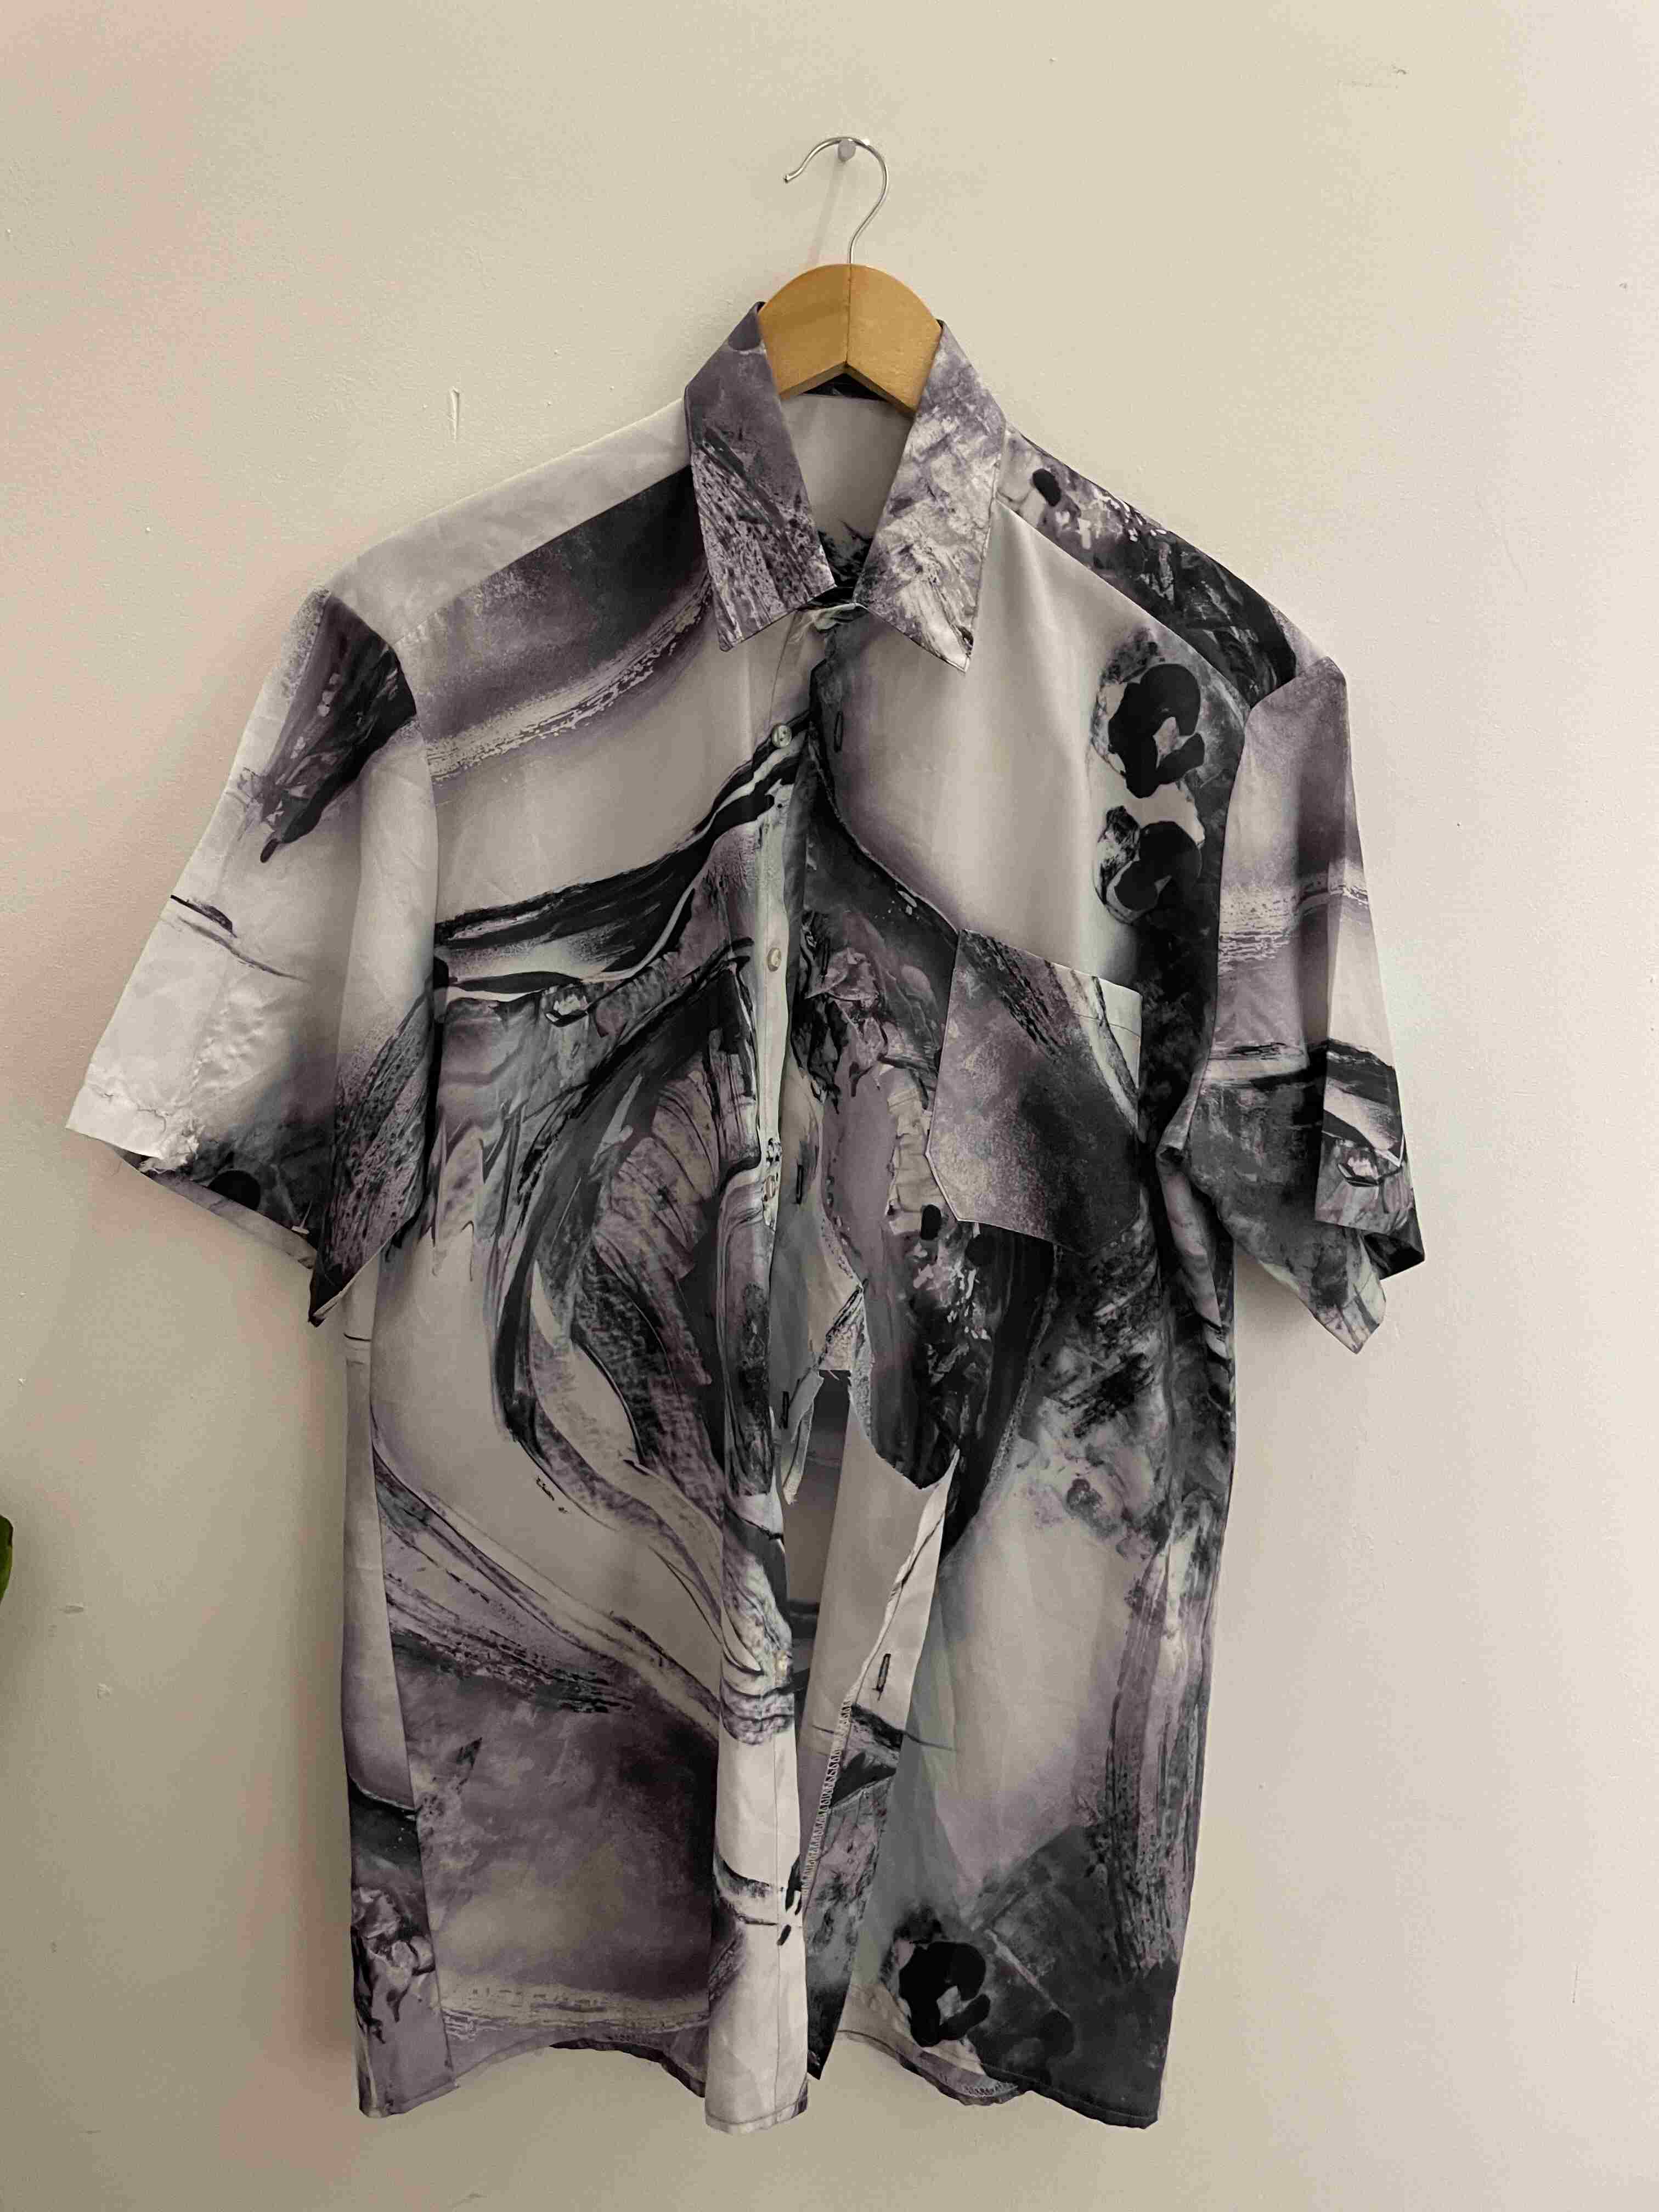 Vintage black and white abstract pattern medium short sleeve shirt